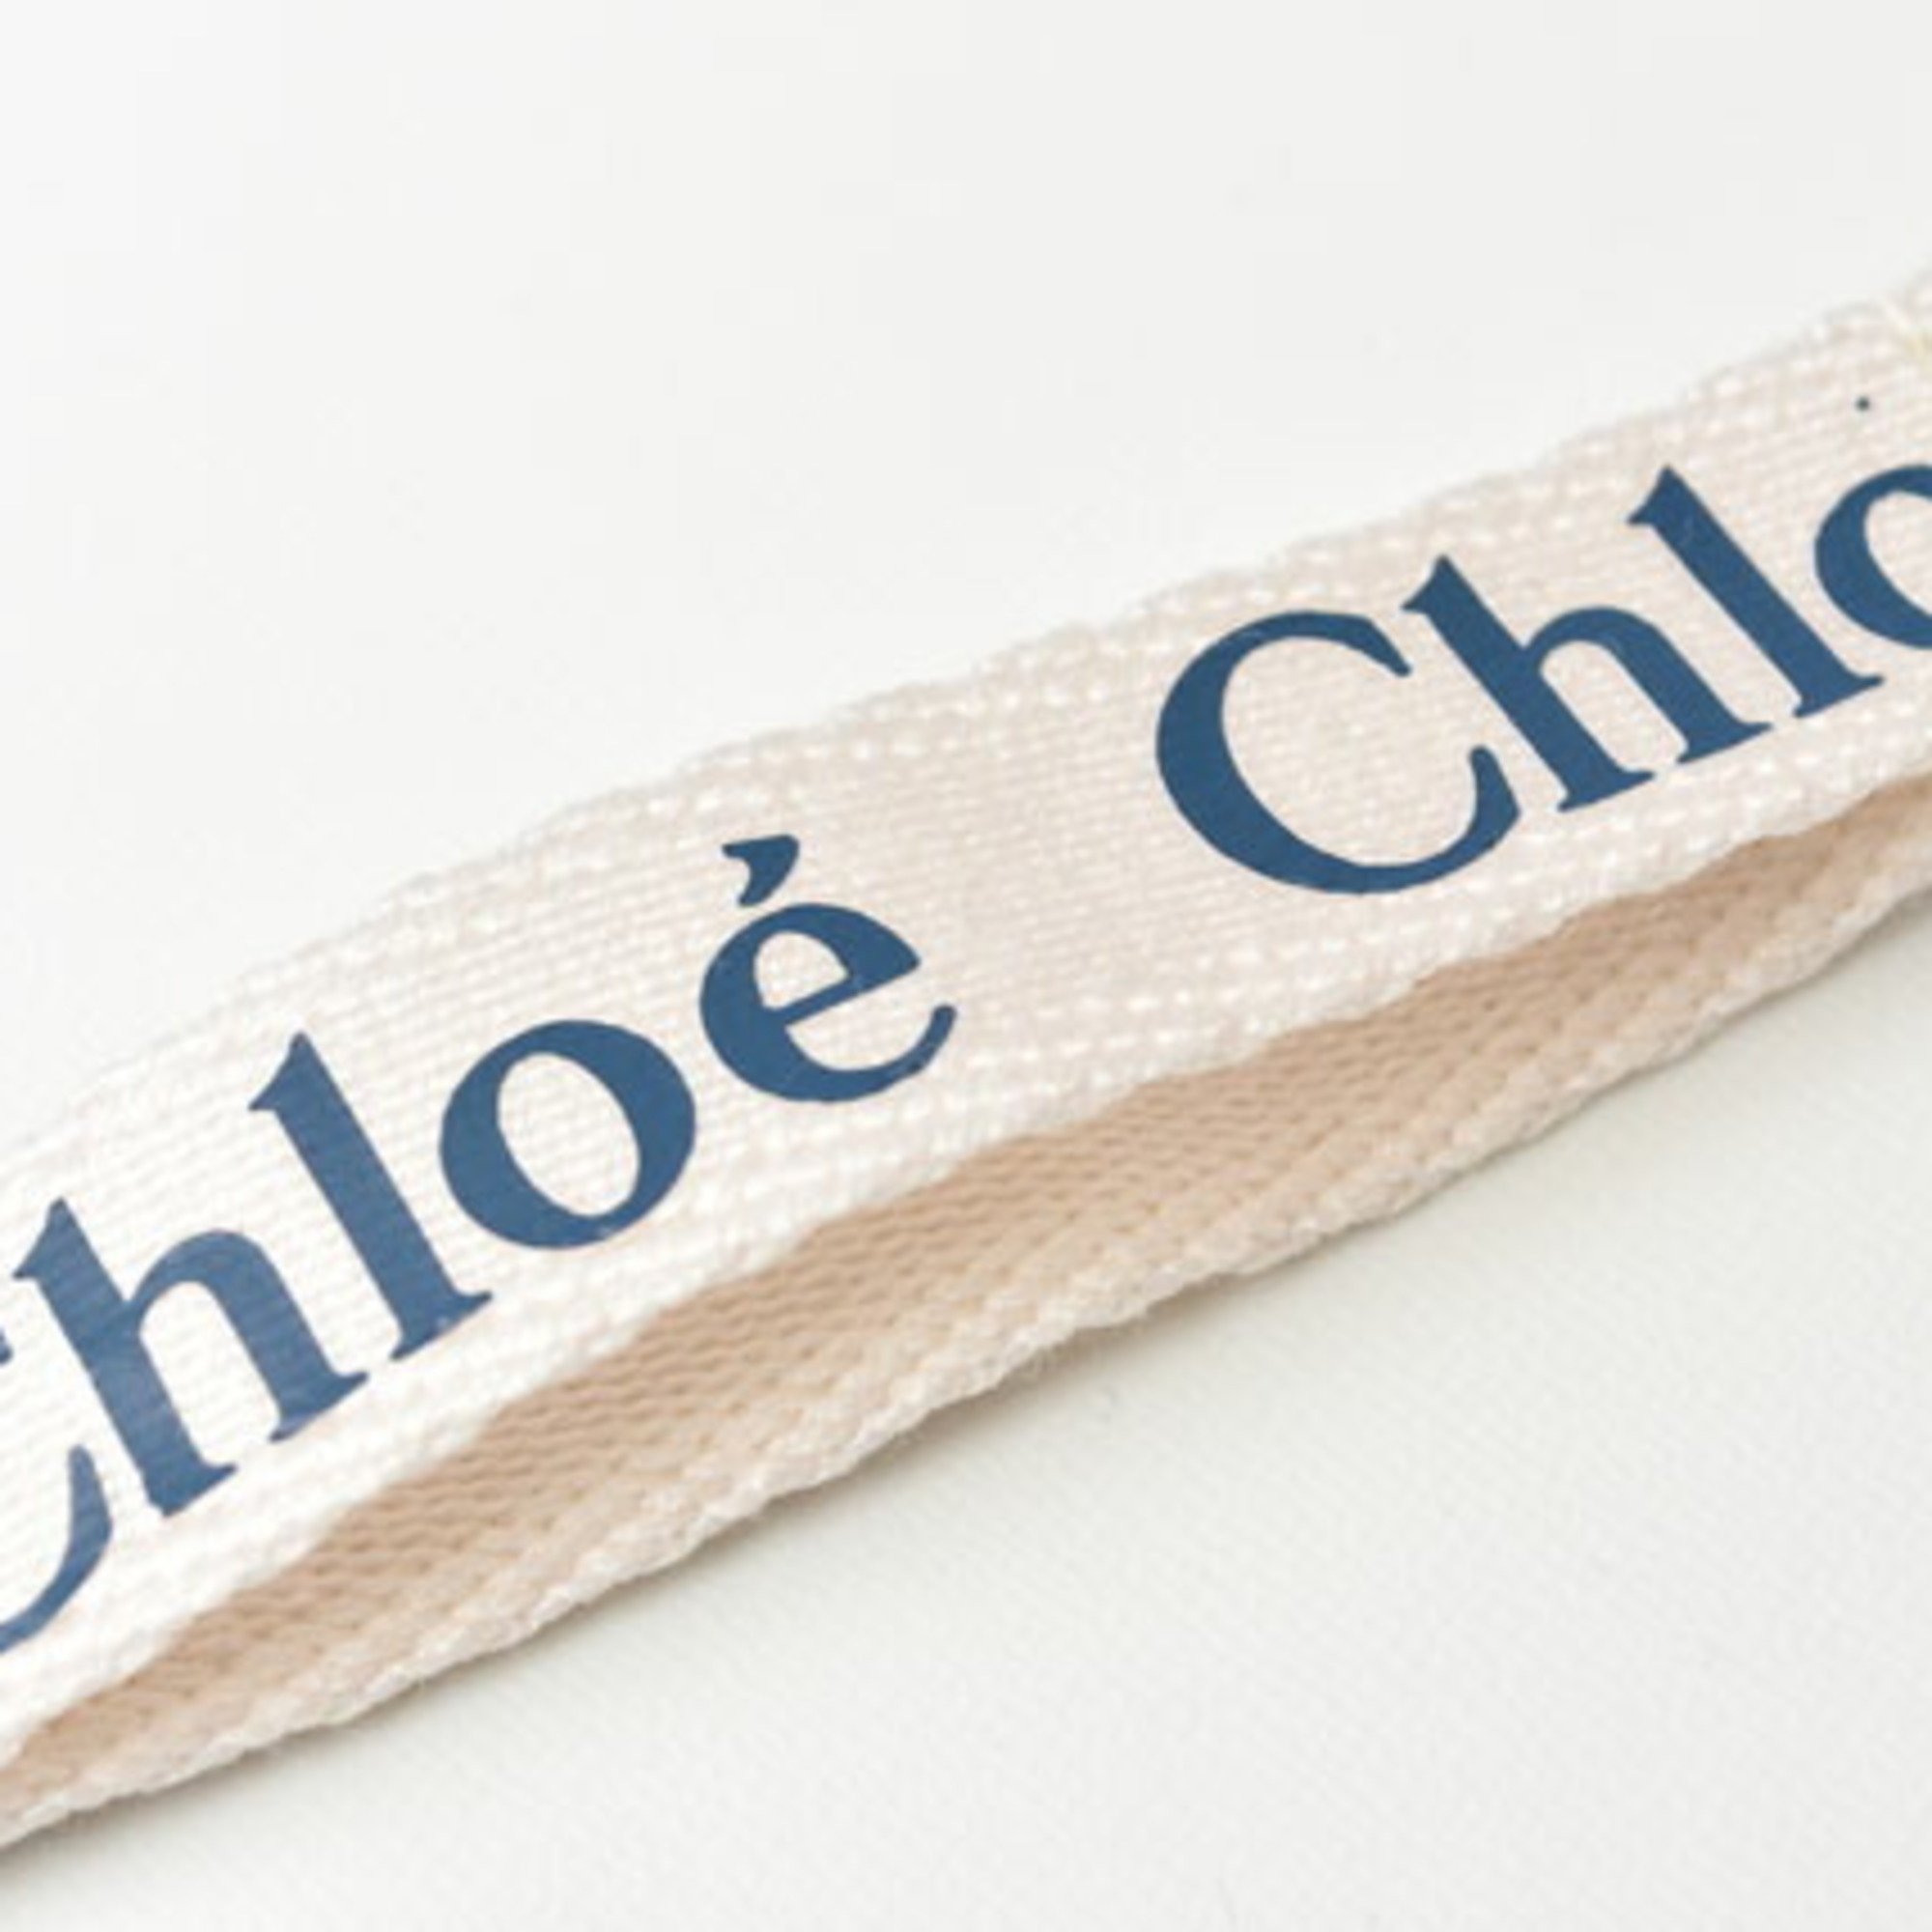 Chloé Chloe key ring bag charm mouse motif love natural silver